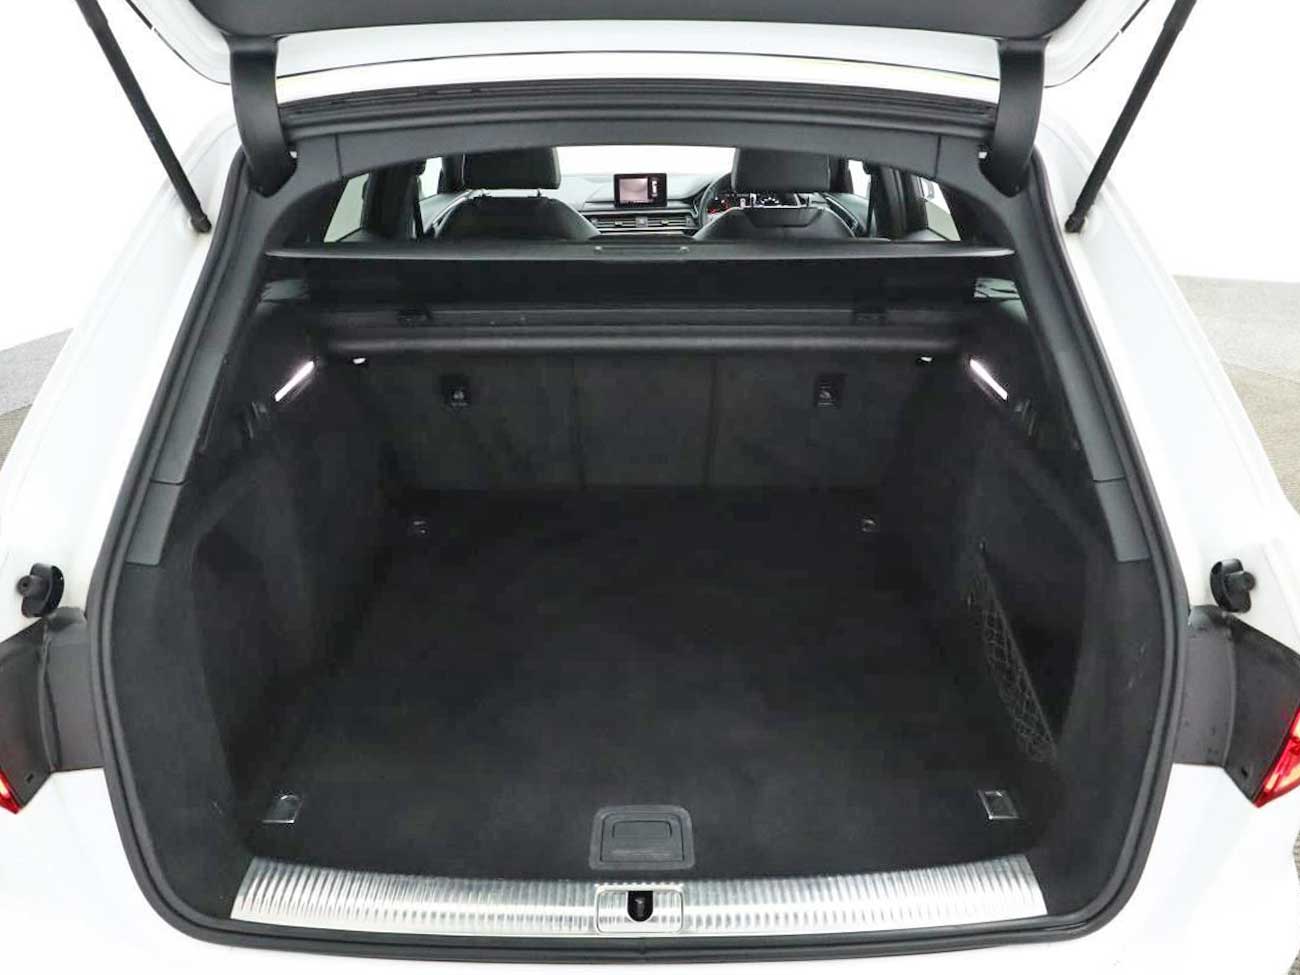 Audi A4 Avant boot view